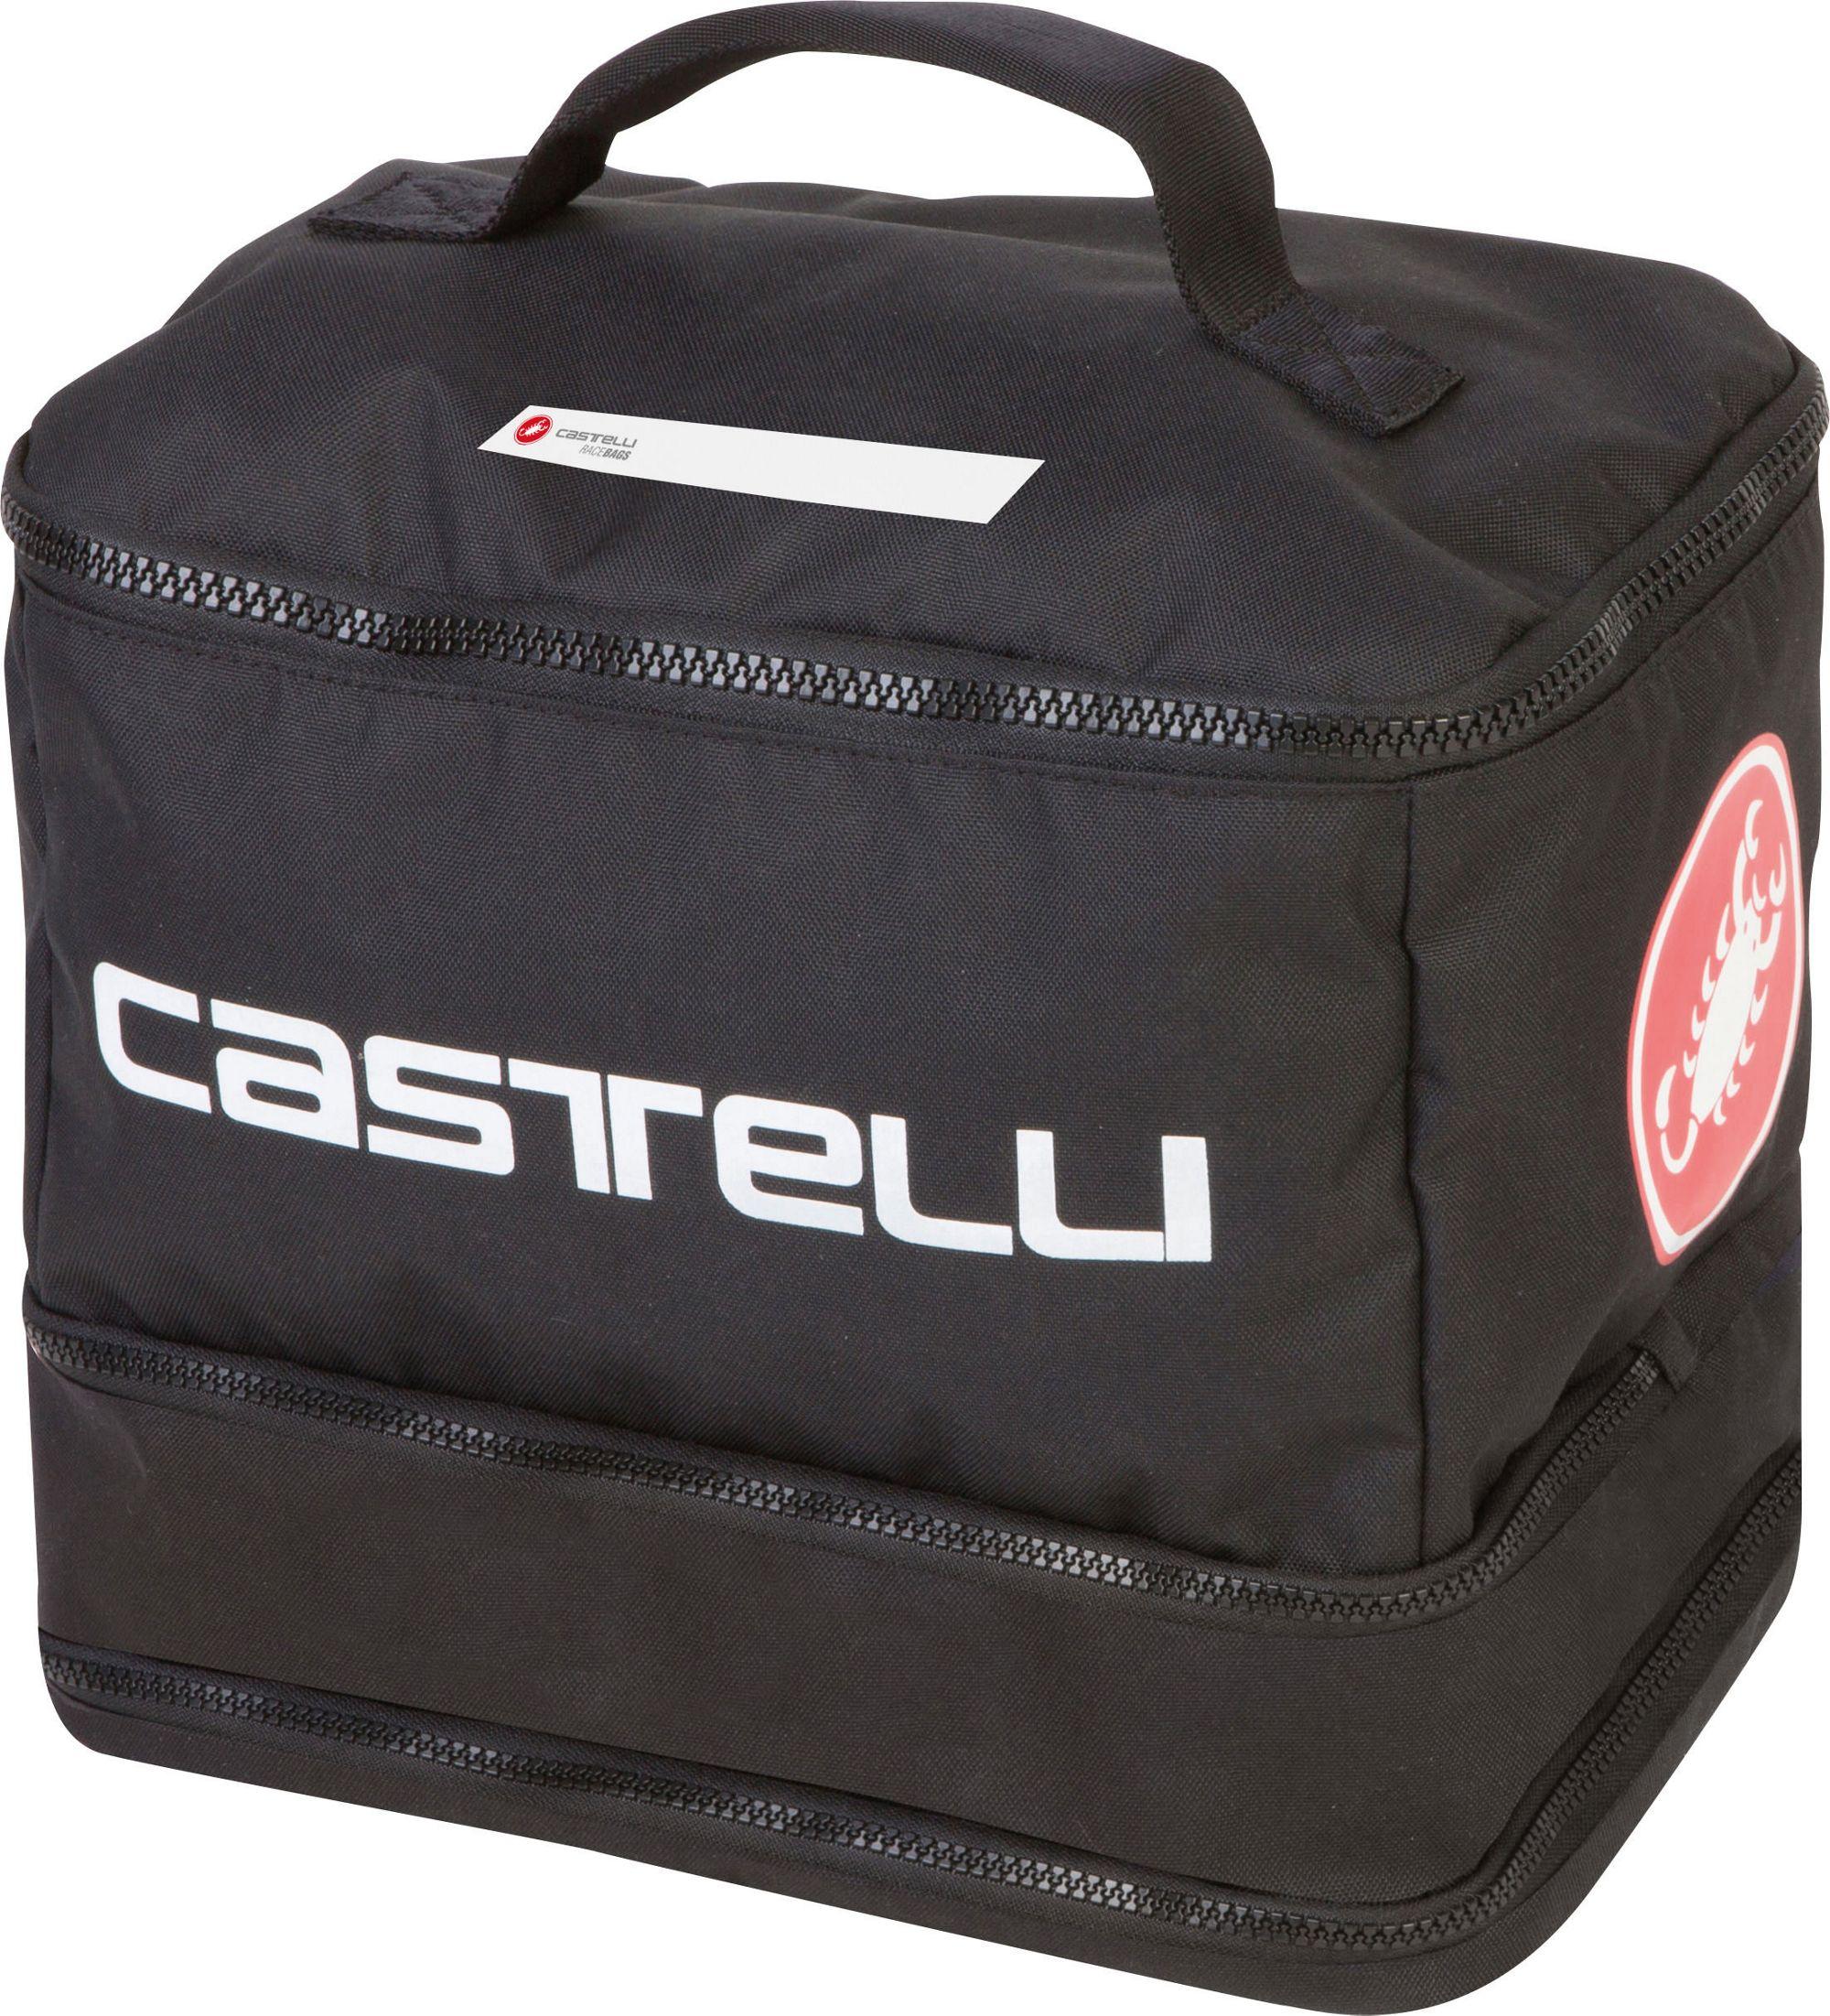 Castelli Race Rain Bag - Black